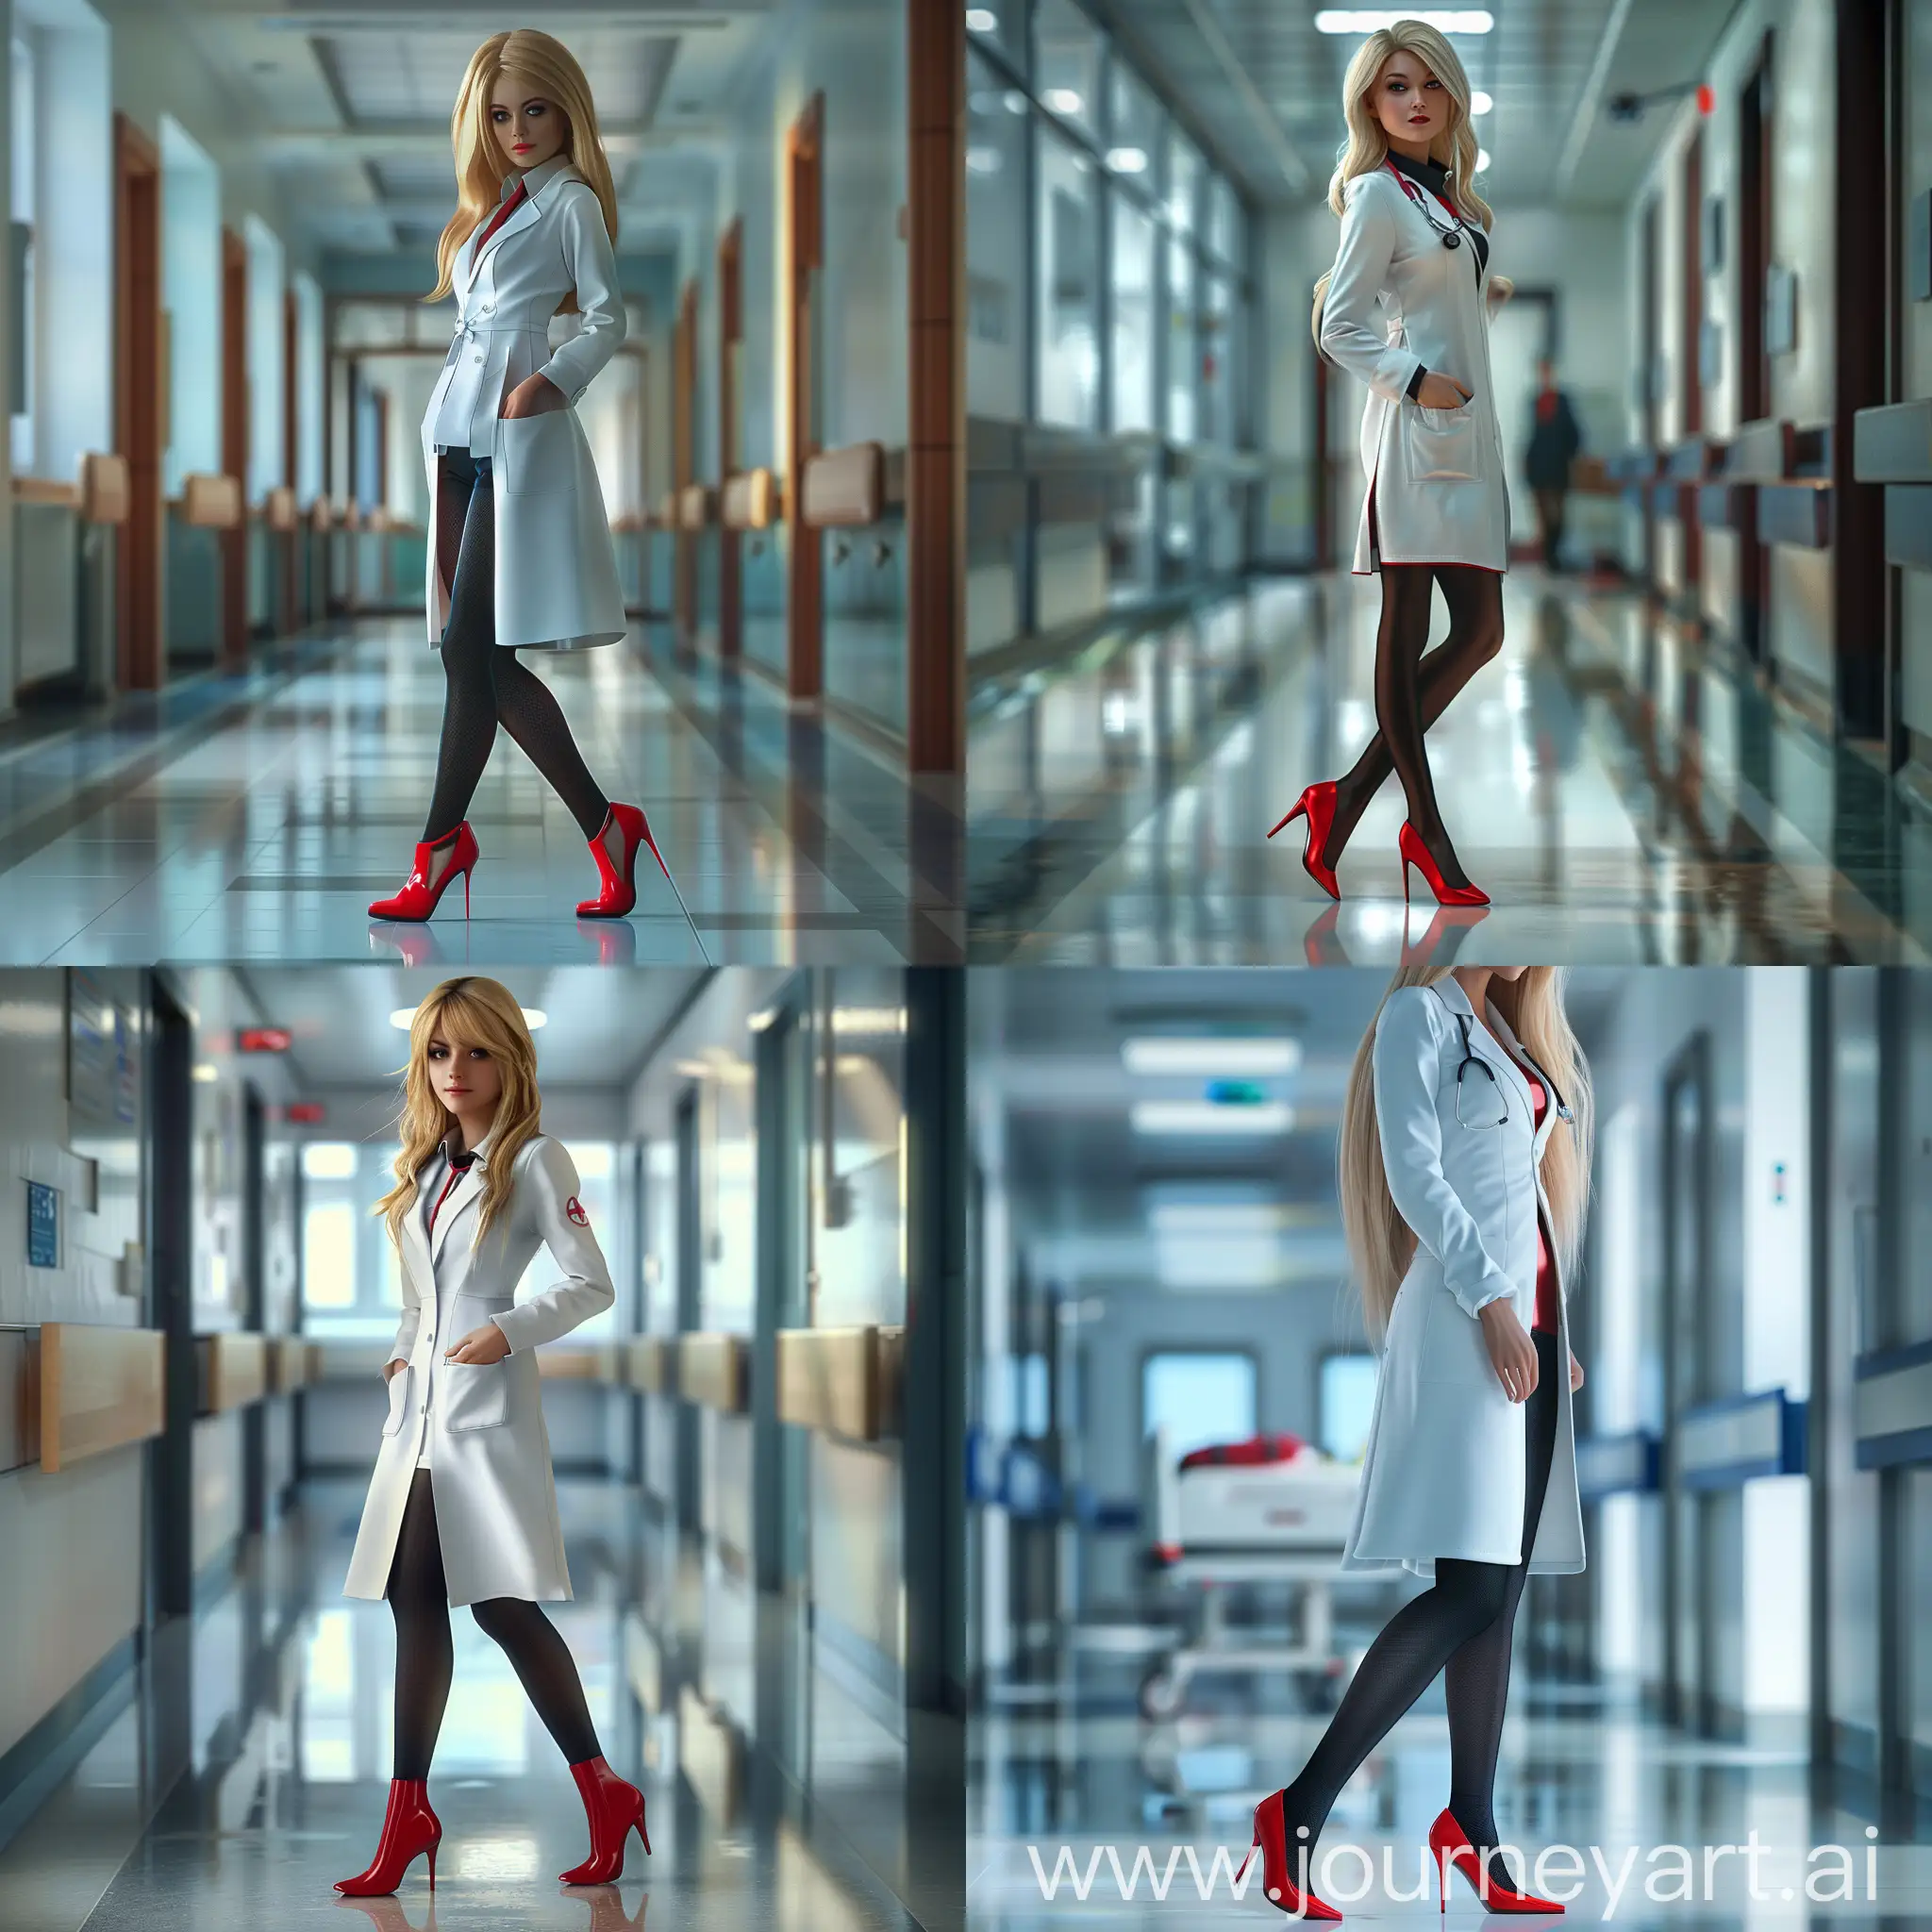 Elegant-Blonde-Doctor-in-White-Coat-Walking-the-Hospital-Corridor